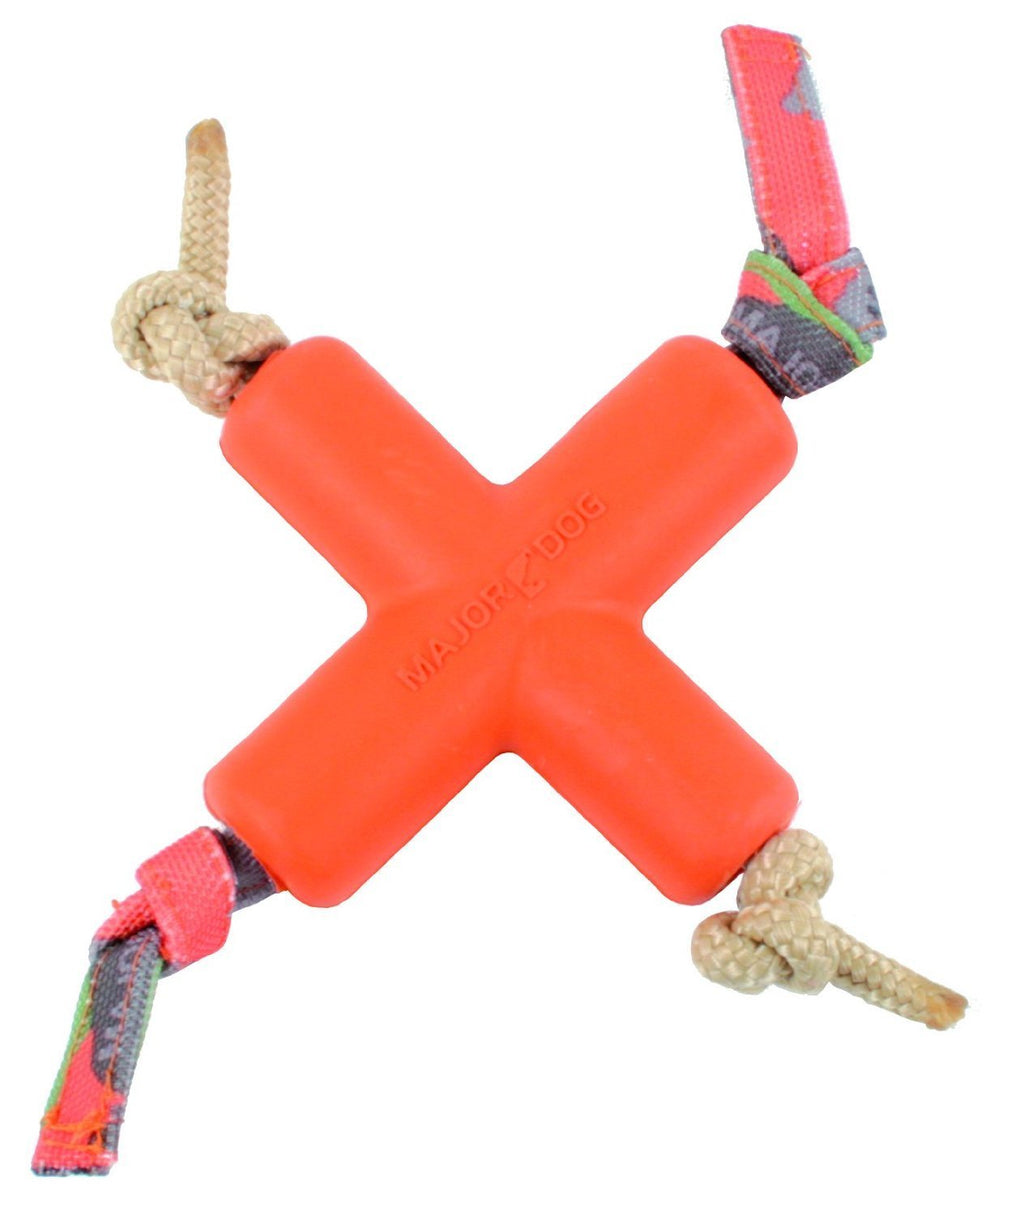 [Australia] - MAJORDOG Dog X Toy, 4", Orange 